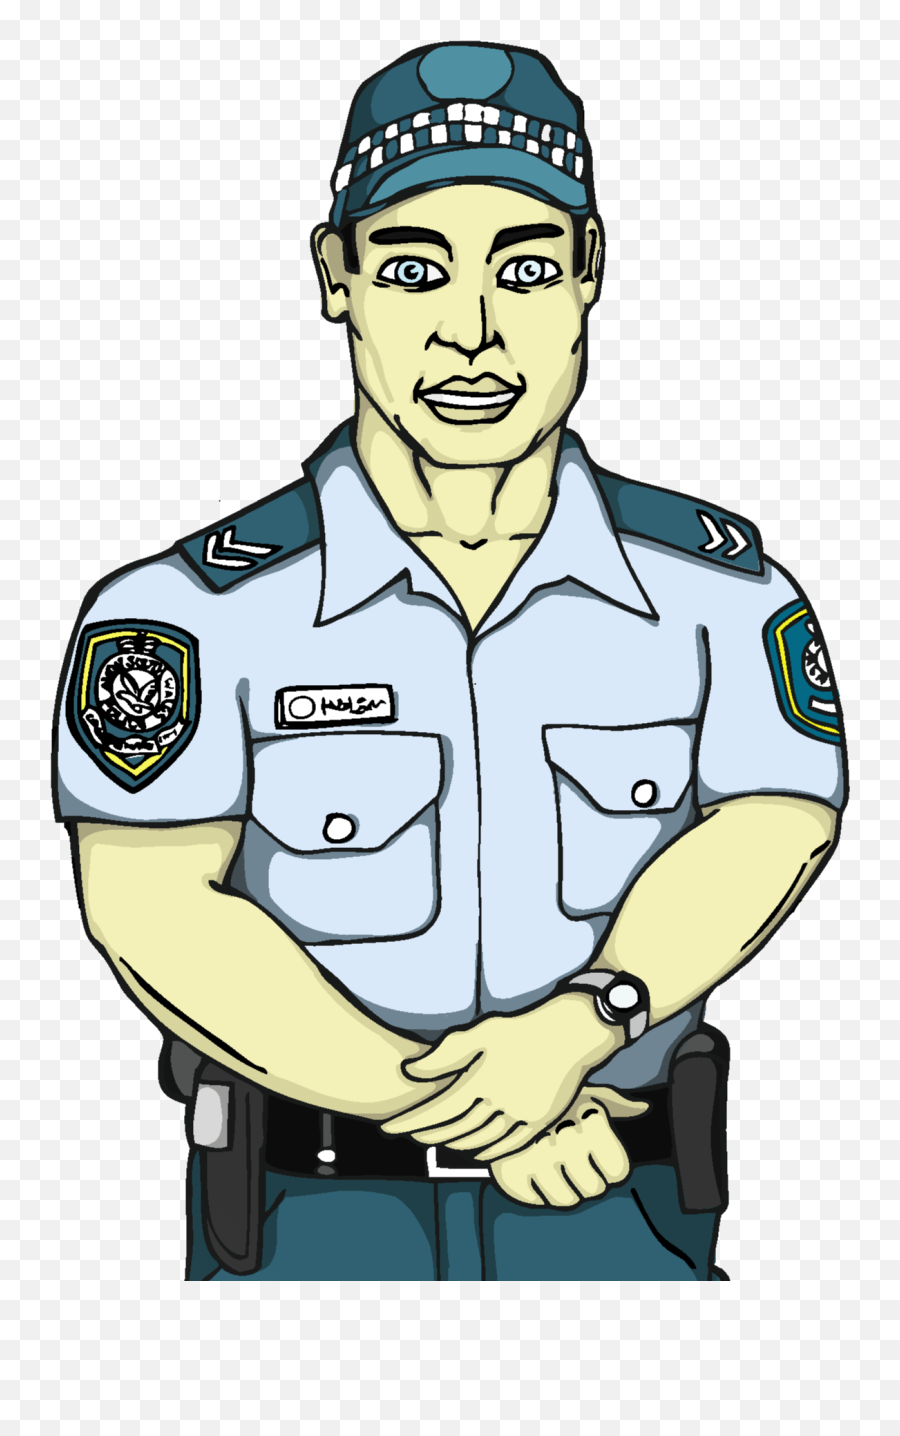 You Helped Toby Cross The Road Safely - Police Officer Emoji,Police Officer Emoji